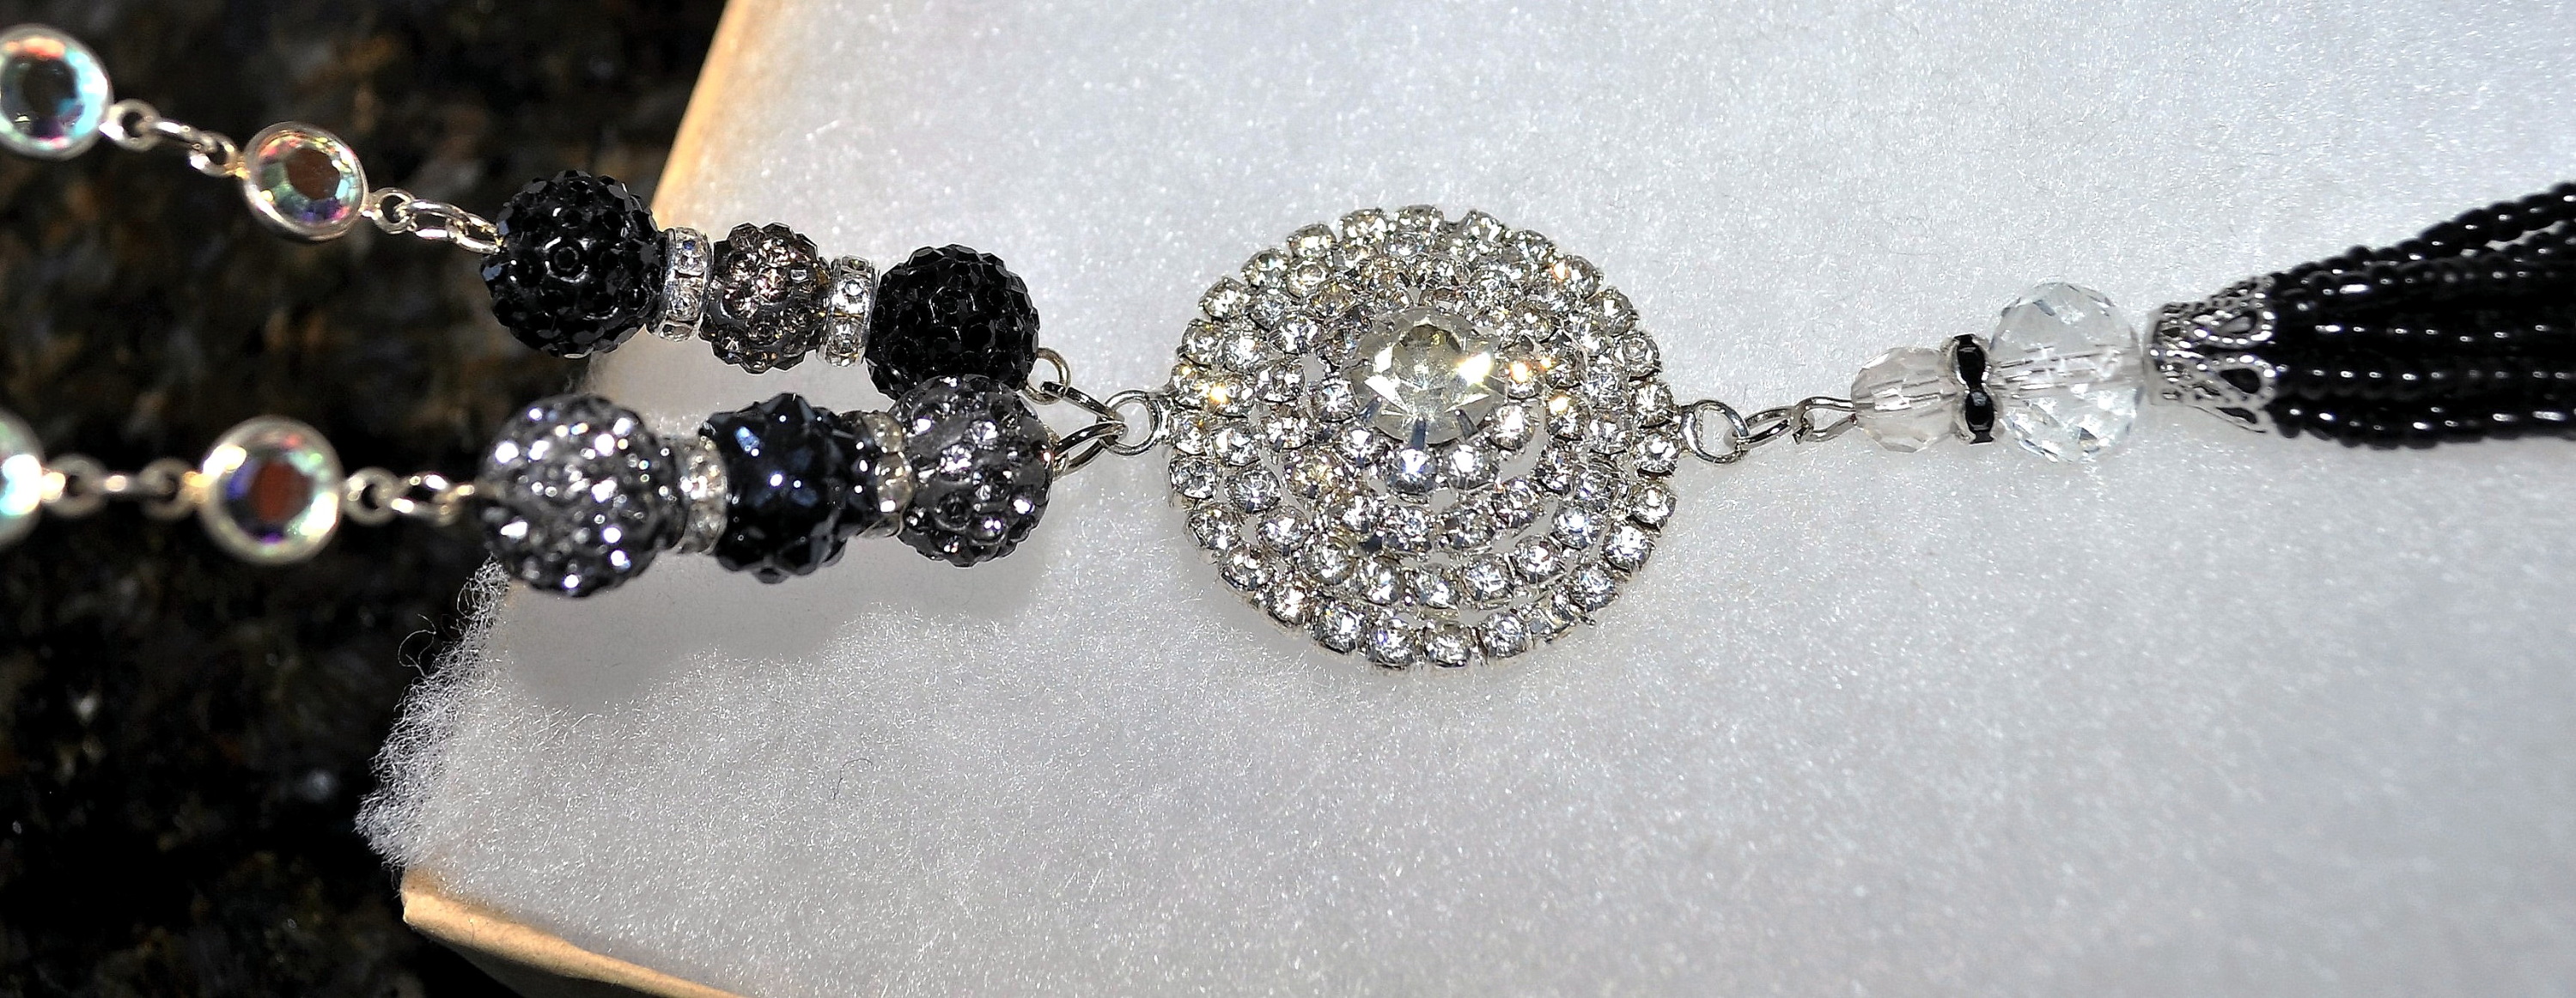 Gina Louise Designs Swarovski Crystal Necklace.